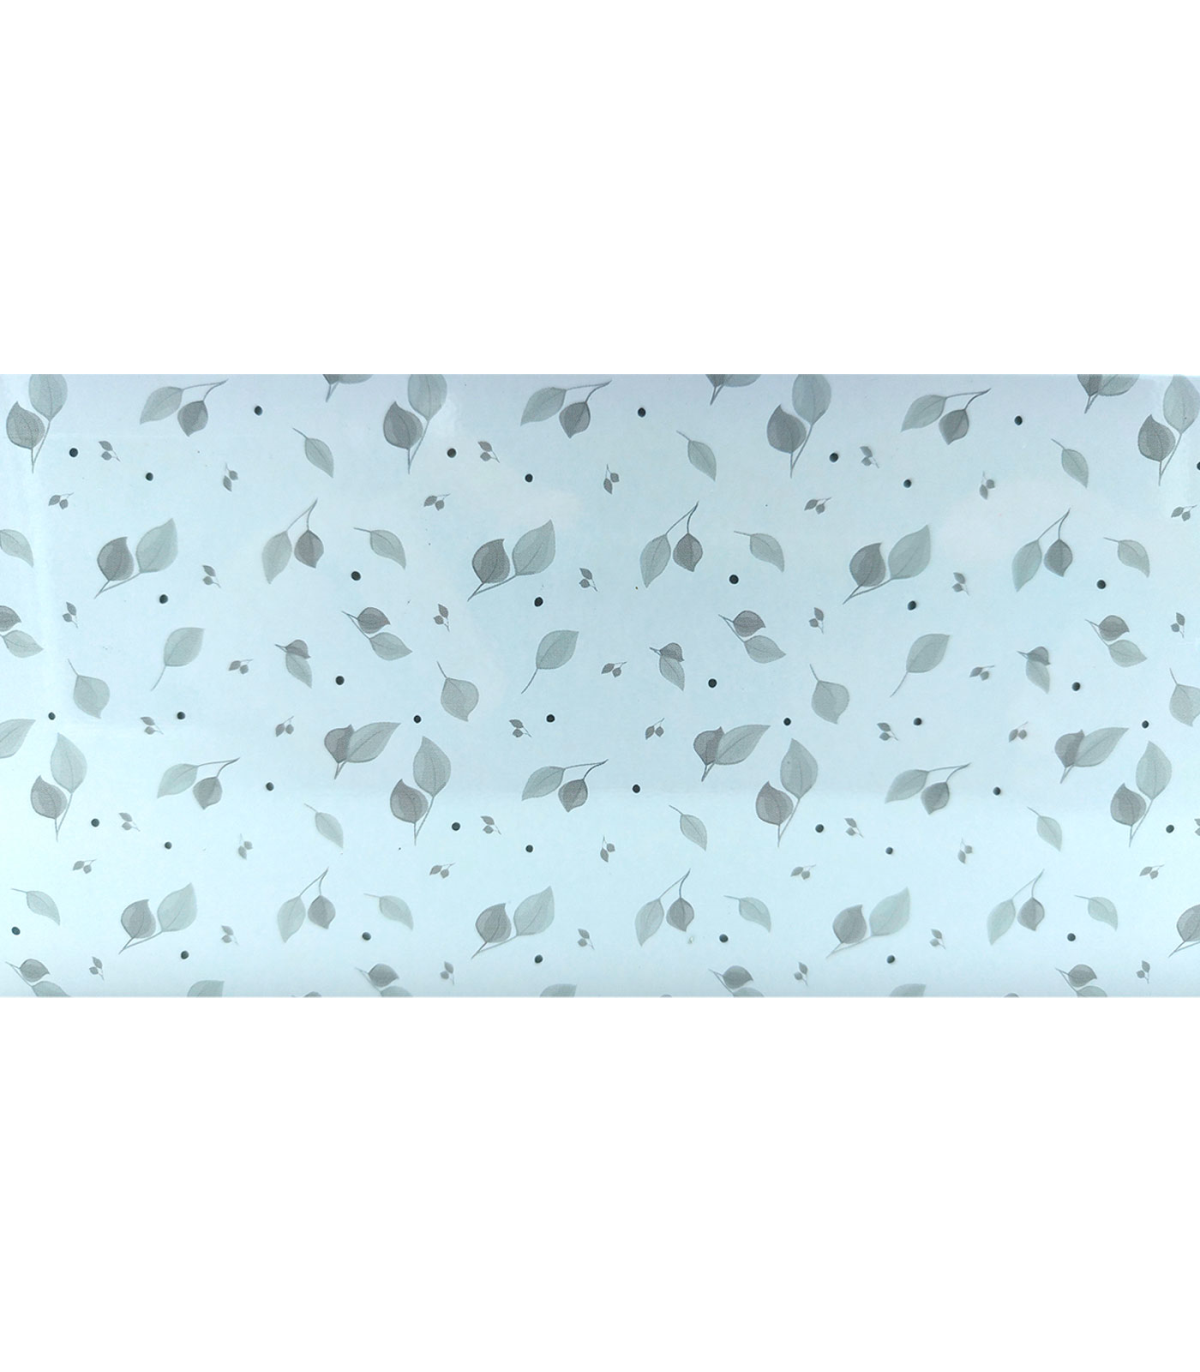 Tradineur - Caja de pañuelos de papel recargable, metalica, colores  aleatorios, dispensador de panuelos de papel